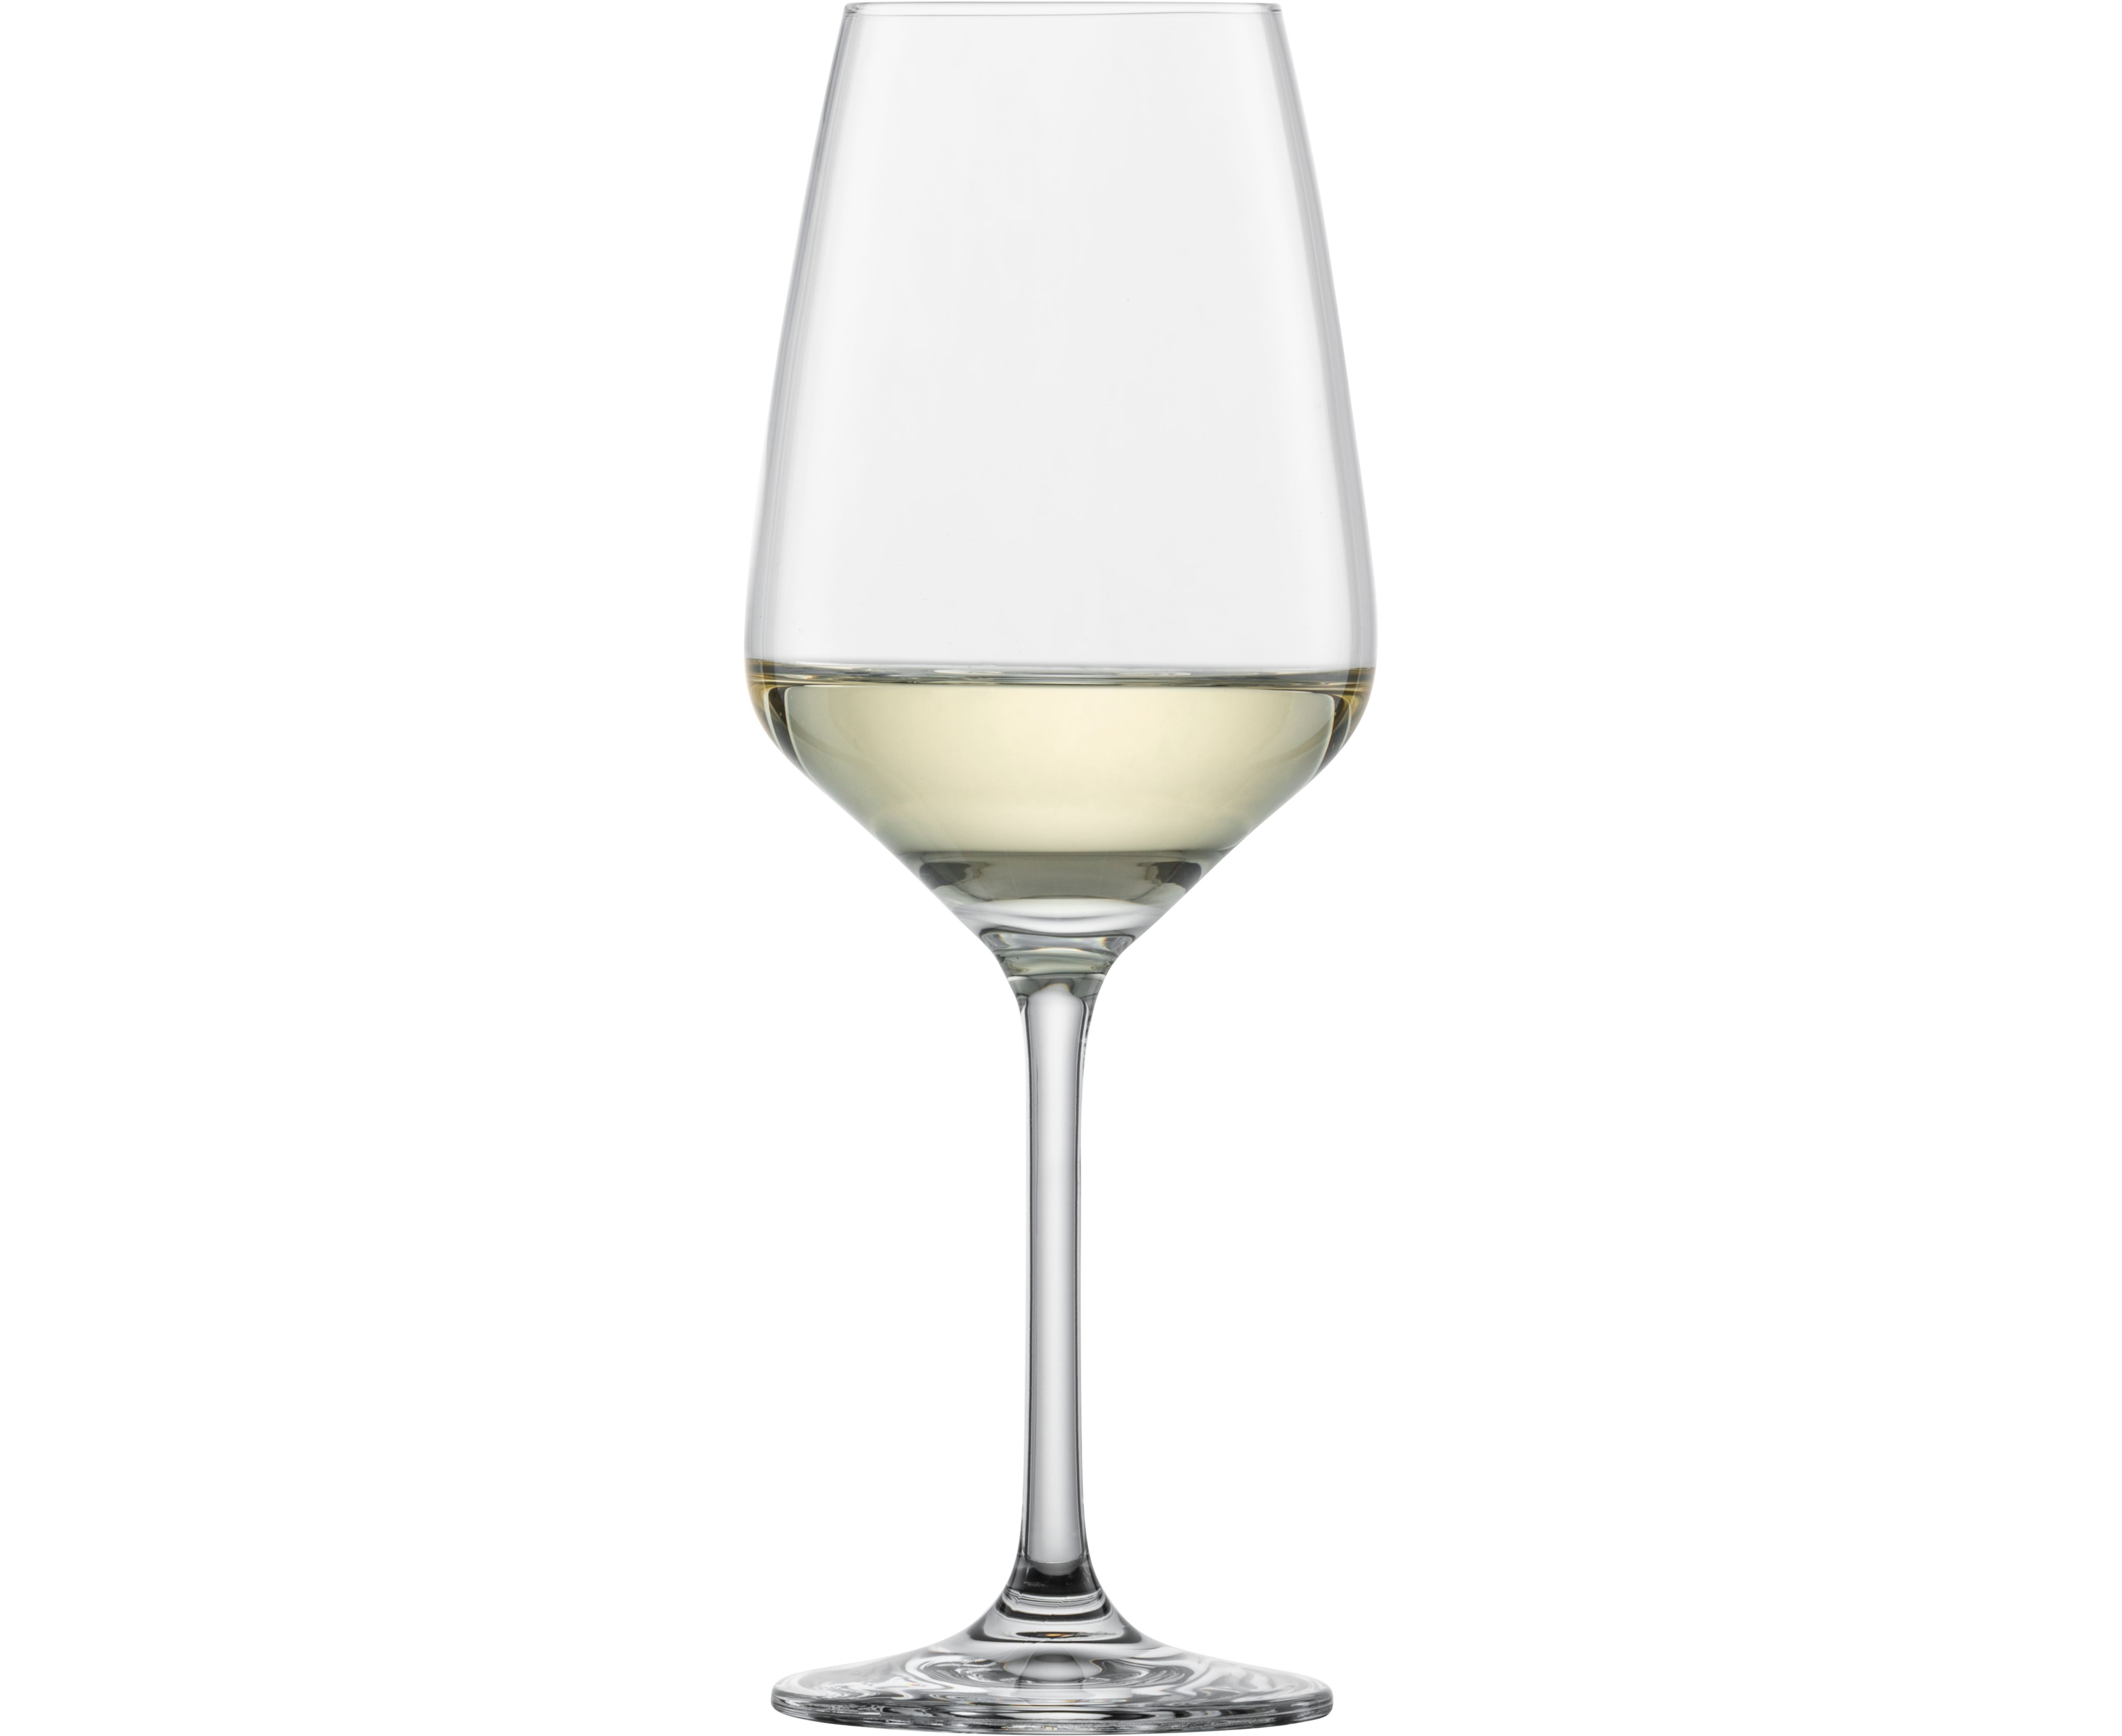 Заказать белое вино. Riedel набор бокалов для вина Vinum Sauvignon Blanc/dessertwine 6416/33 2 шт. 350 Мл. Бокал для белого вина, 300 мл. Riedel набор бокалов для вина Vinum Viognier/Chardonnay 6416/05 2 шт. 350 Мл. Бокал для Шардоне Шпигелау.